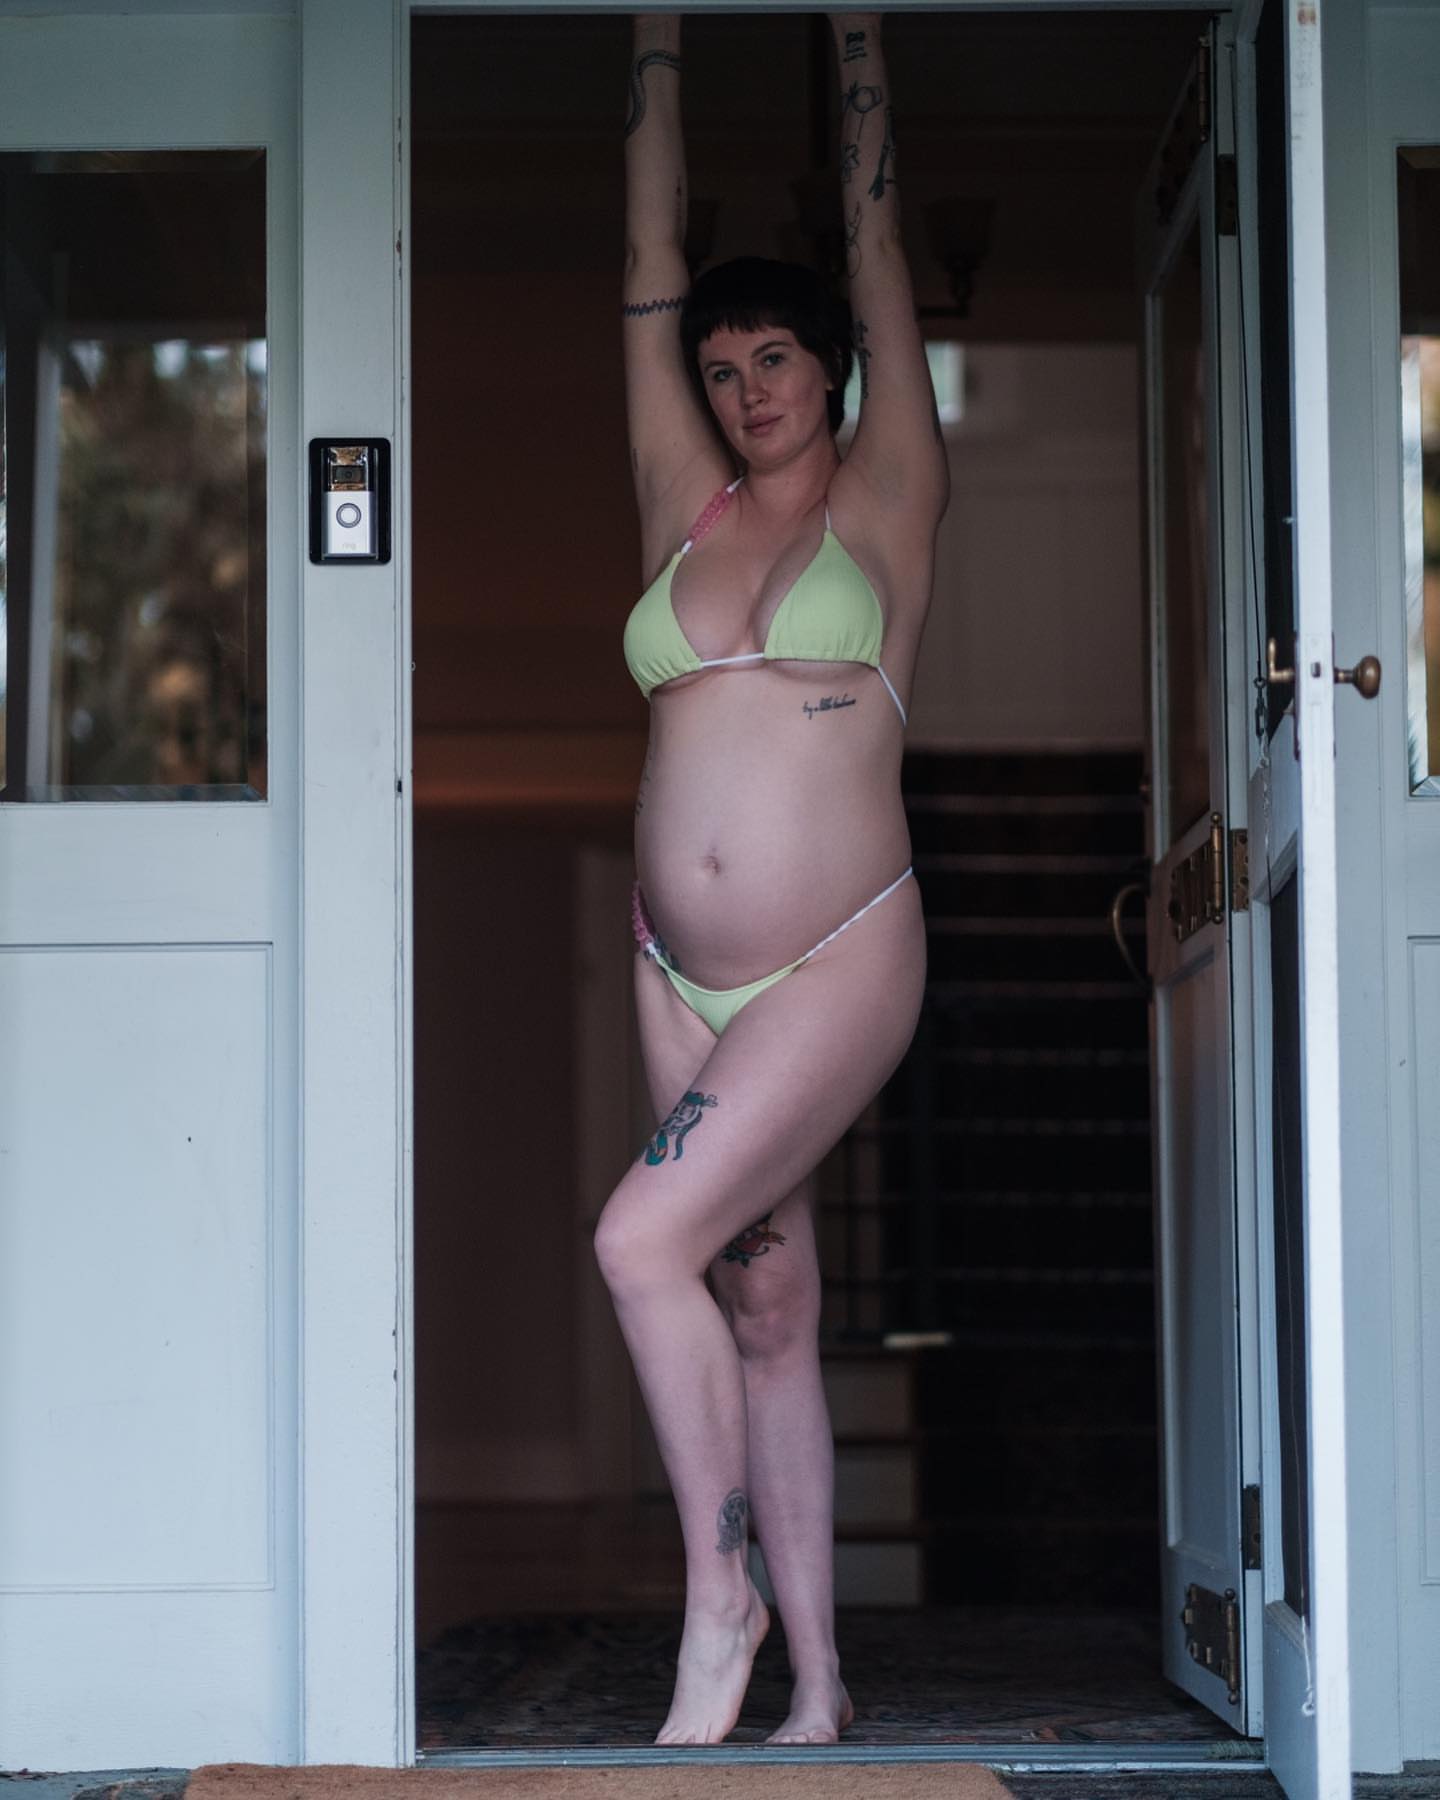 Photos n°2 : Ireland Baldwin’s Baby Bumpin’ in A Bikini!